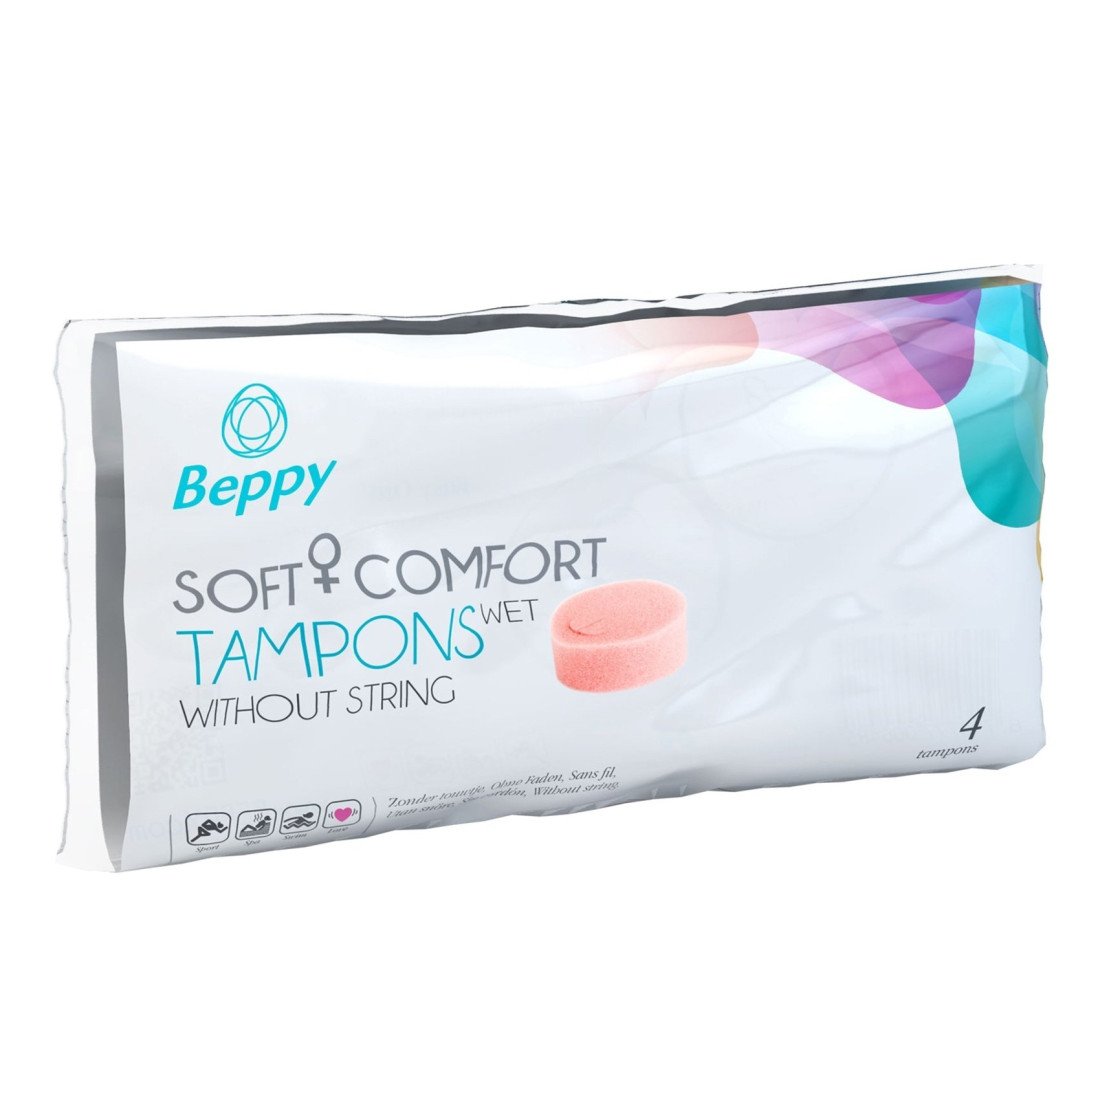 Sudrėkinti tamponai „Soft Comfort Wet“, 4 vnt. - Beppy